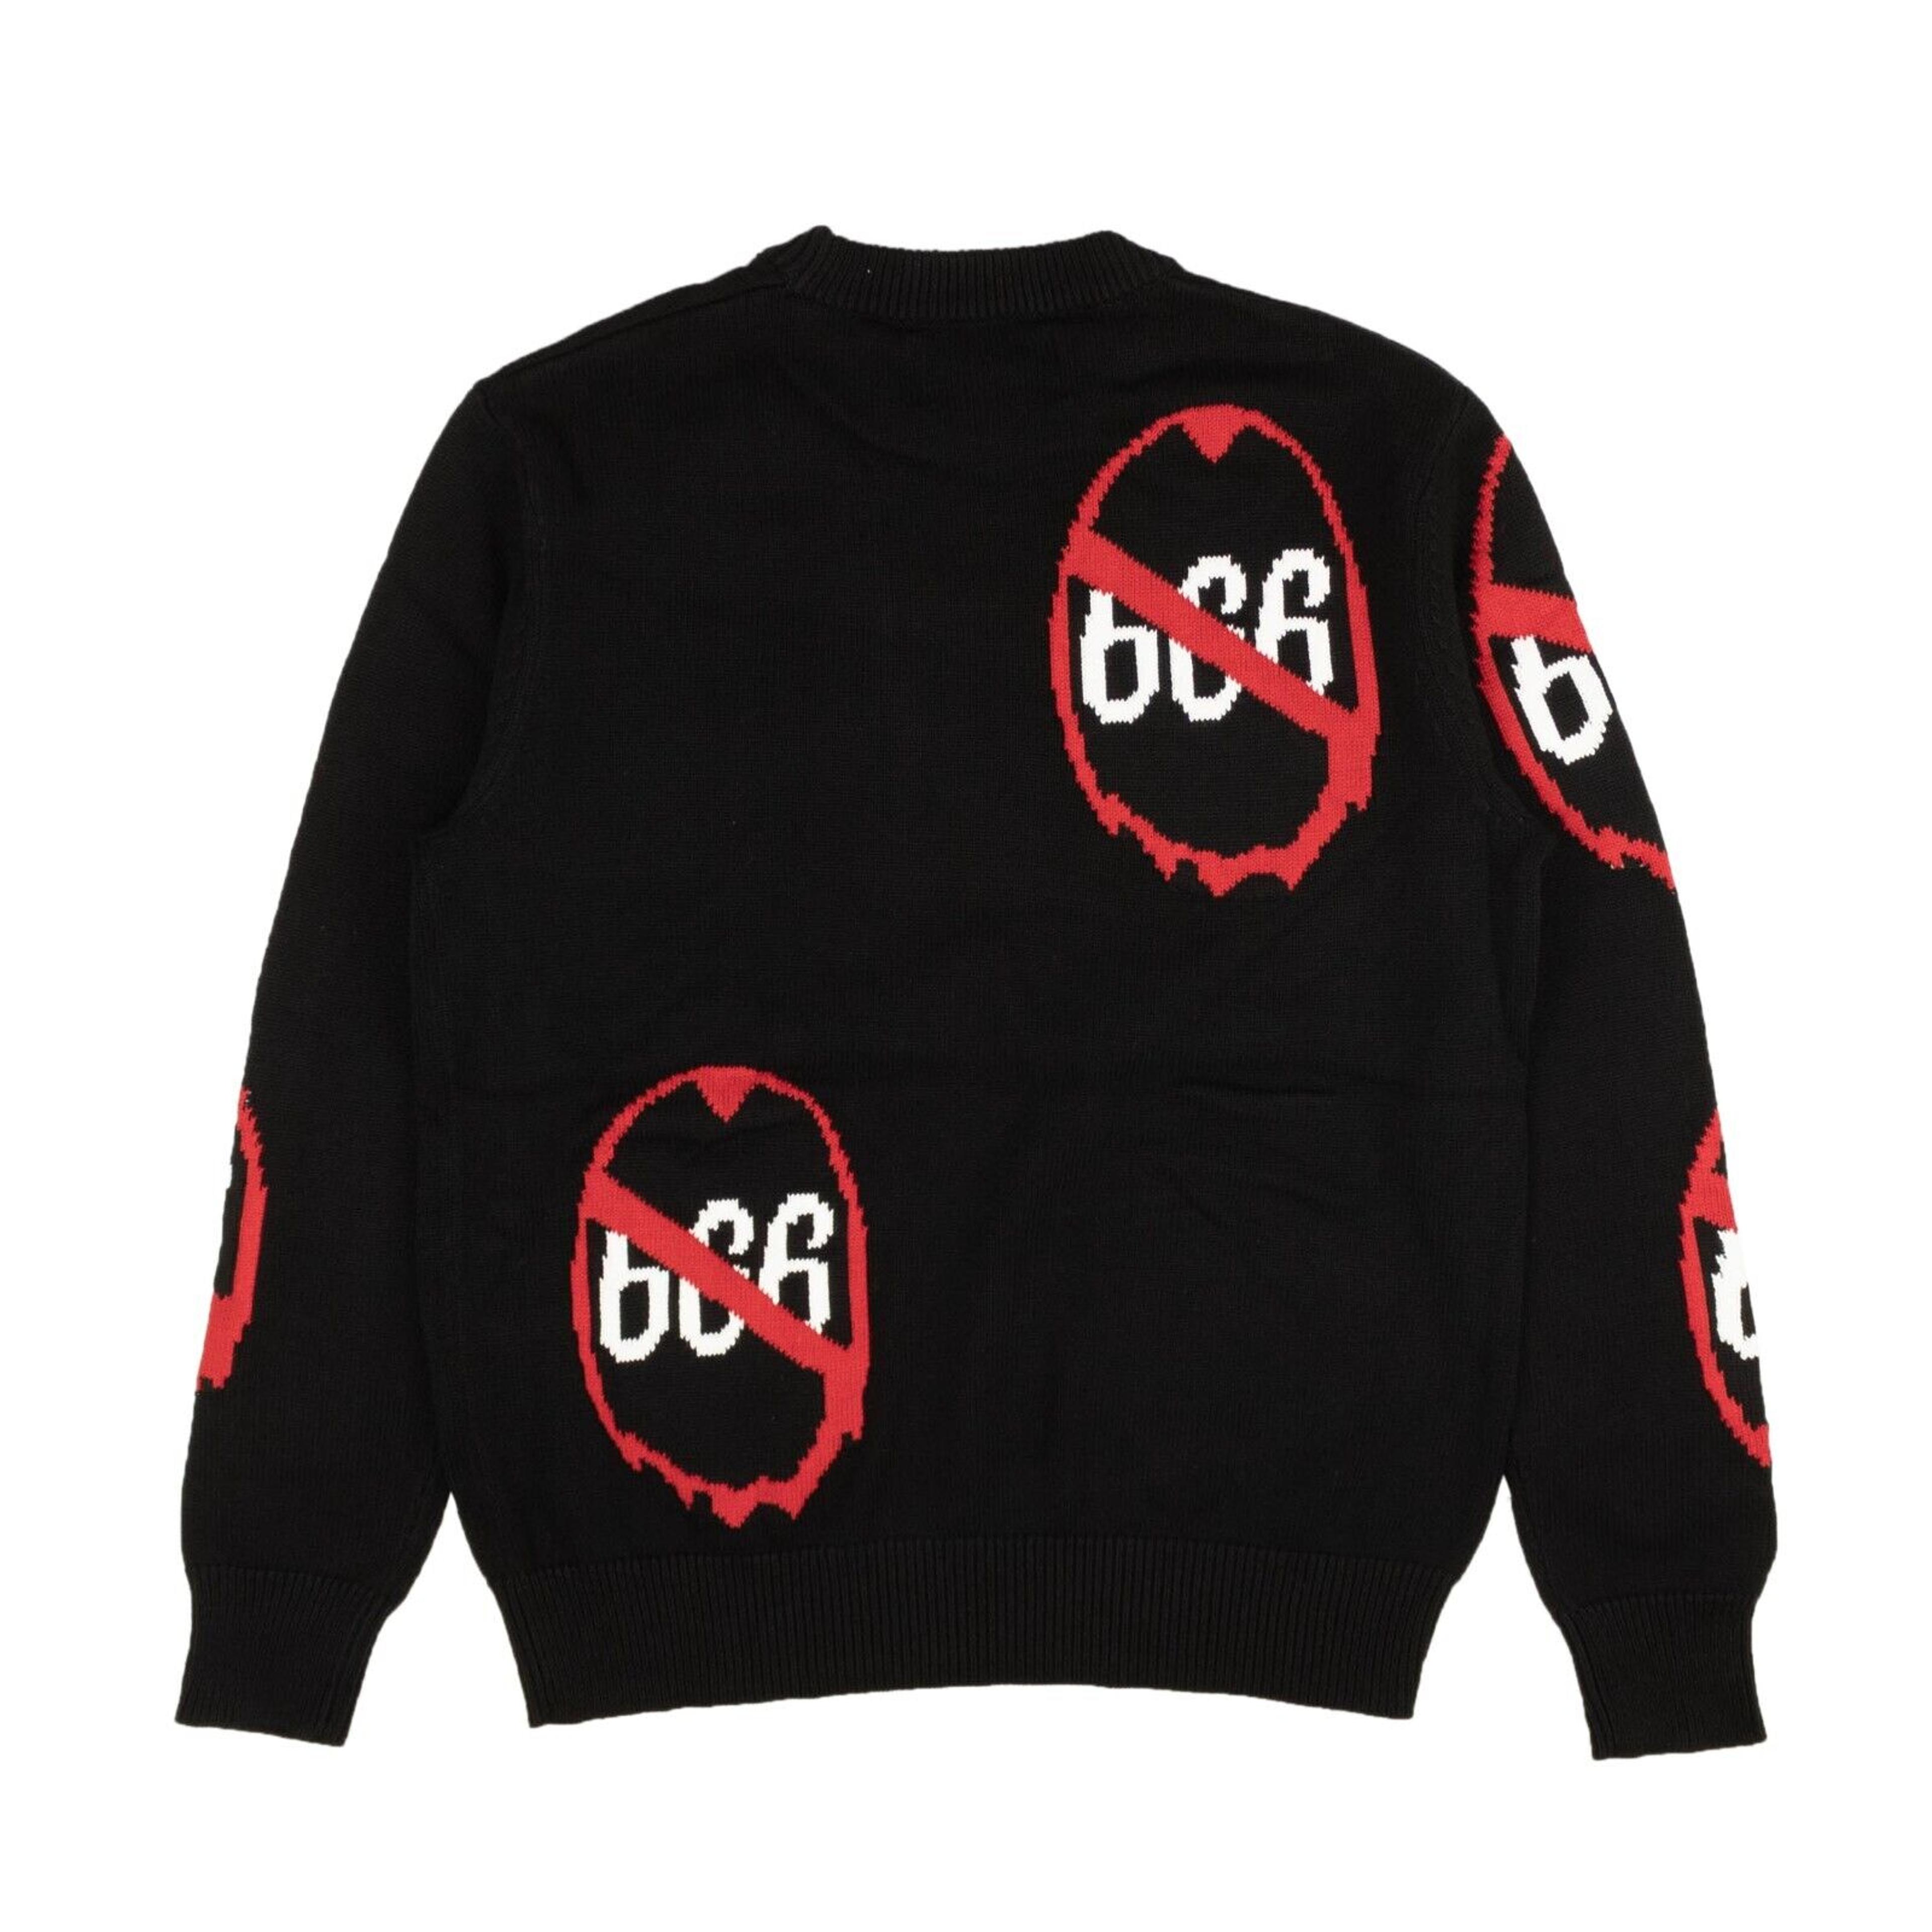 Alternate View 6 of Black Anti 666 Knit Crewneck Sweater